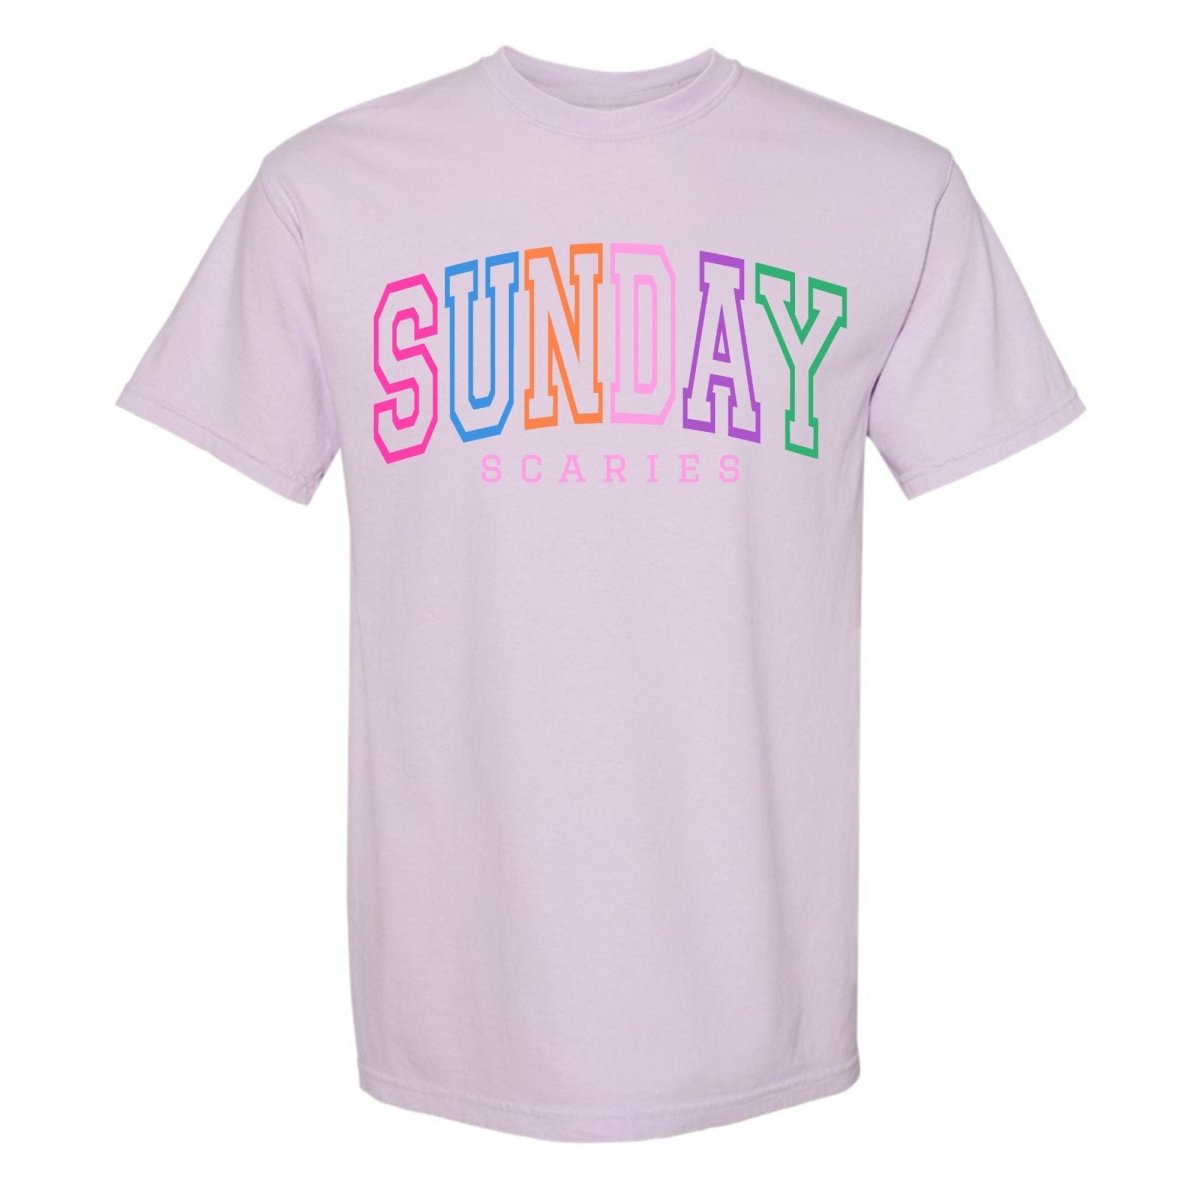 'Sunday Scaries' T - Shirt - United Monograms